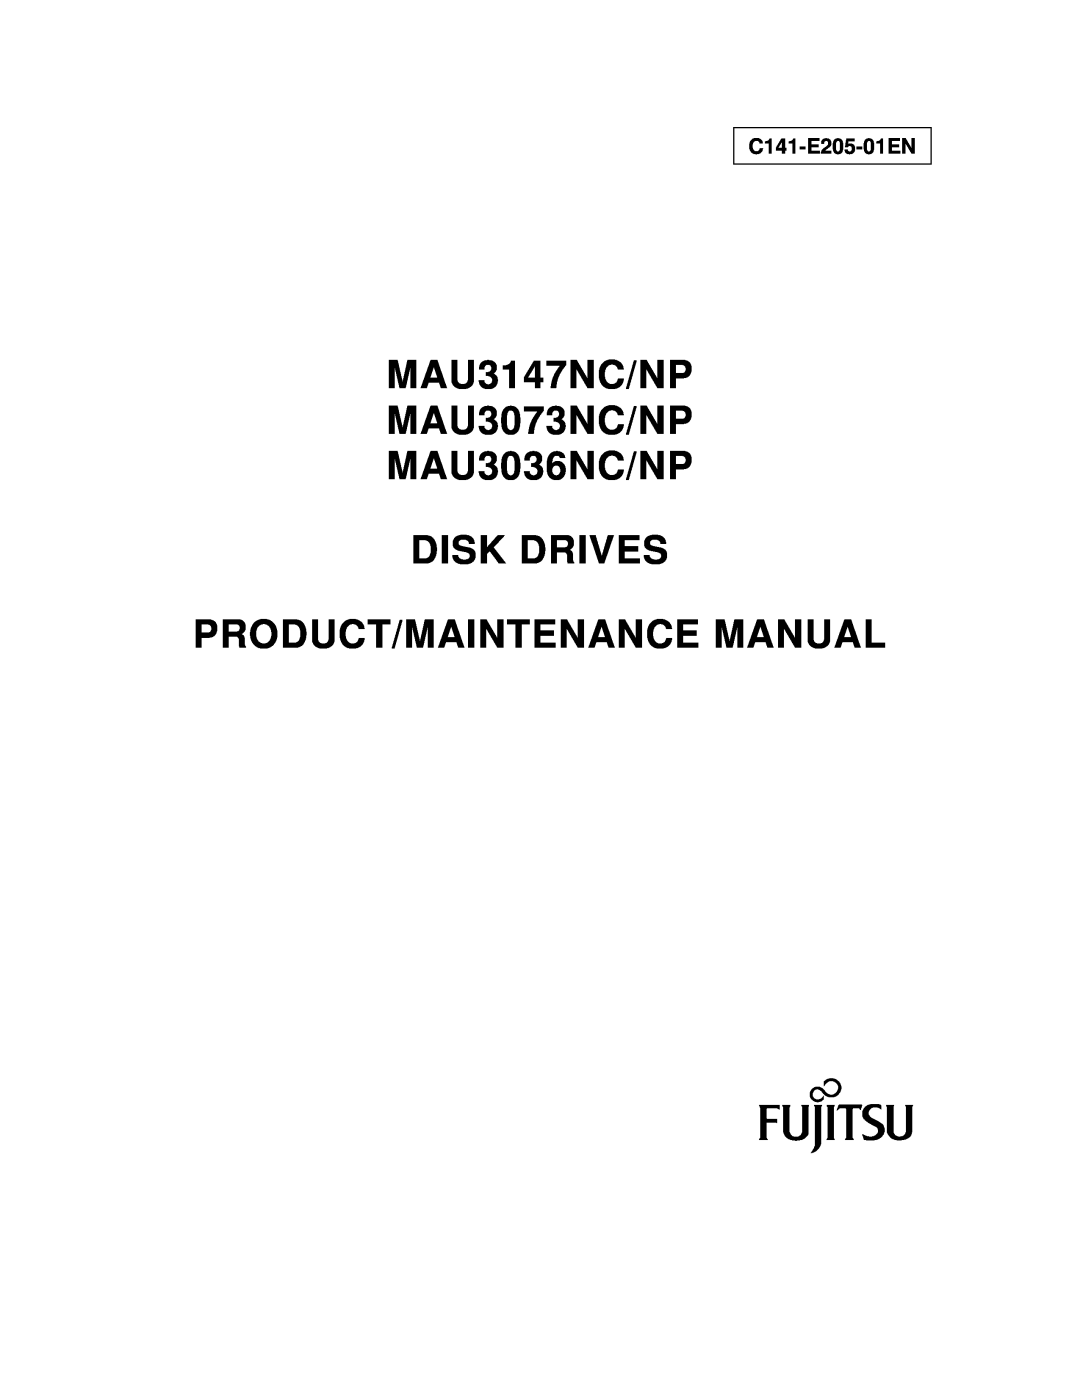 Fujitsu manual C141-E205-01EN, MAU3147NC/NP MAU3073NC/NP MAU3036NC/NP DISK DRIVES, Product/Maintenance Manual 